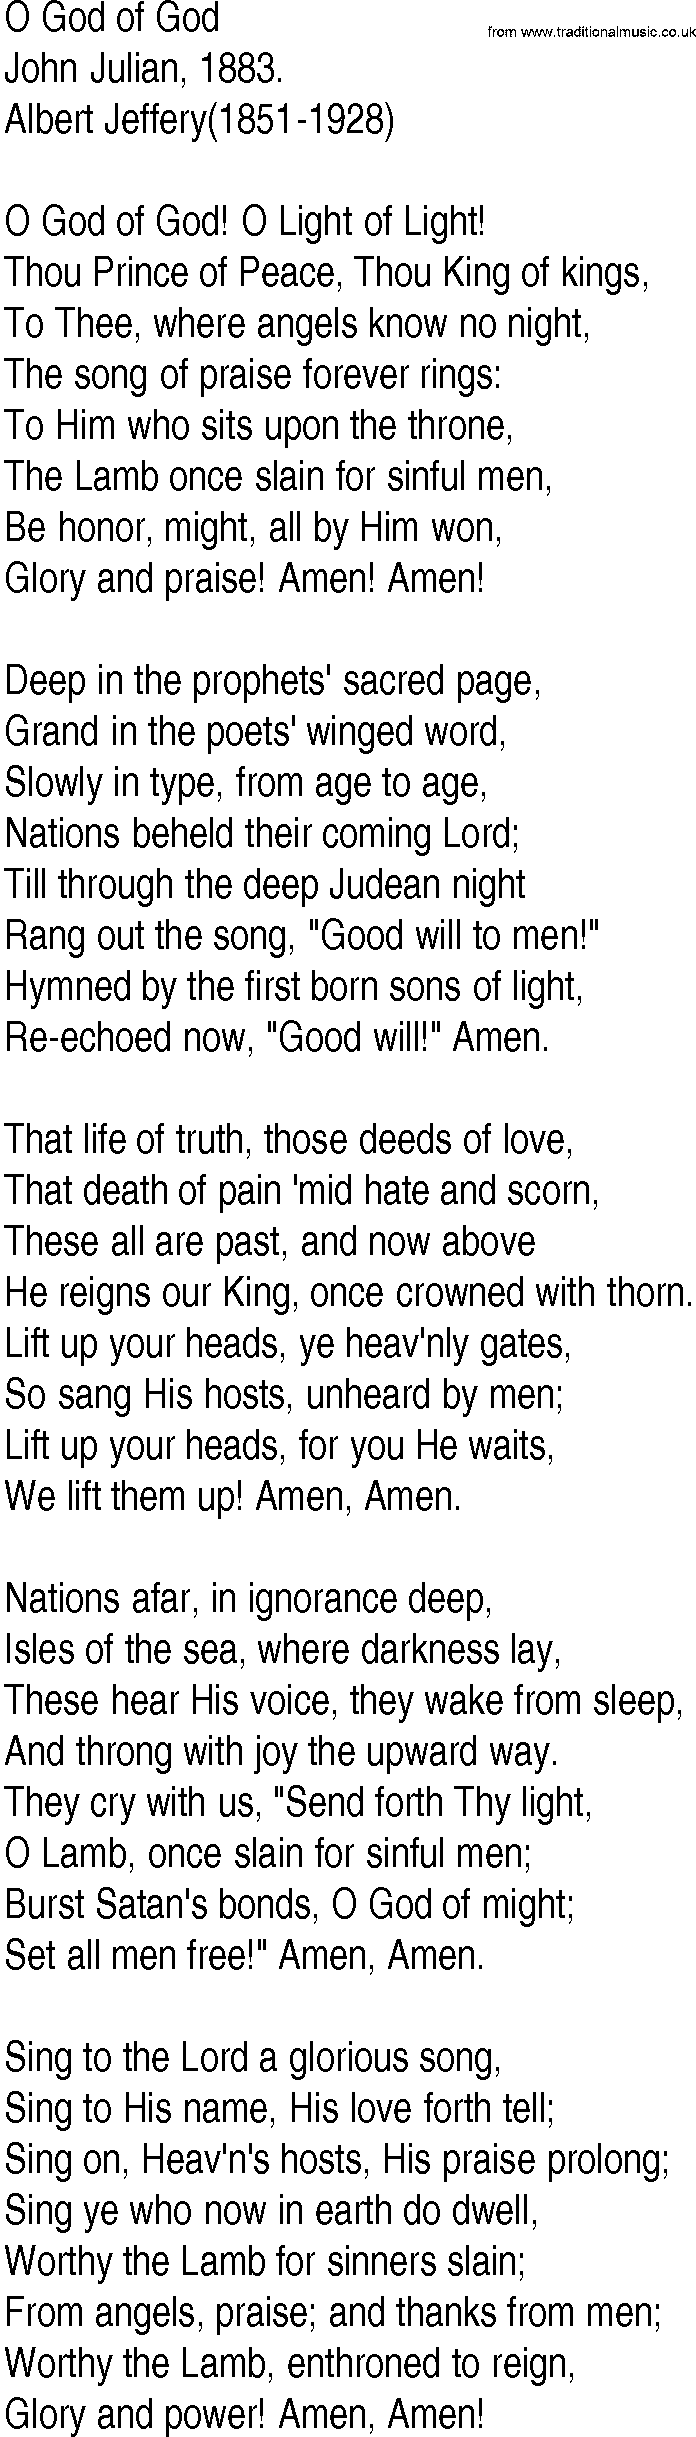 Hymn and Gospel Song: O God of God by John Julian lyrics